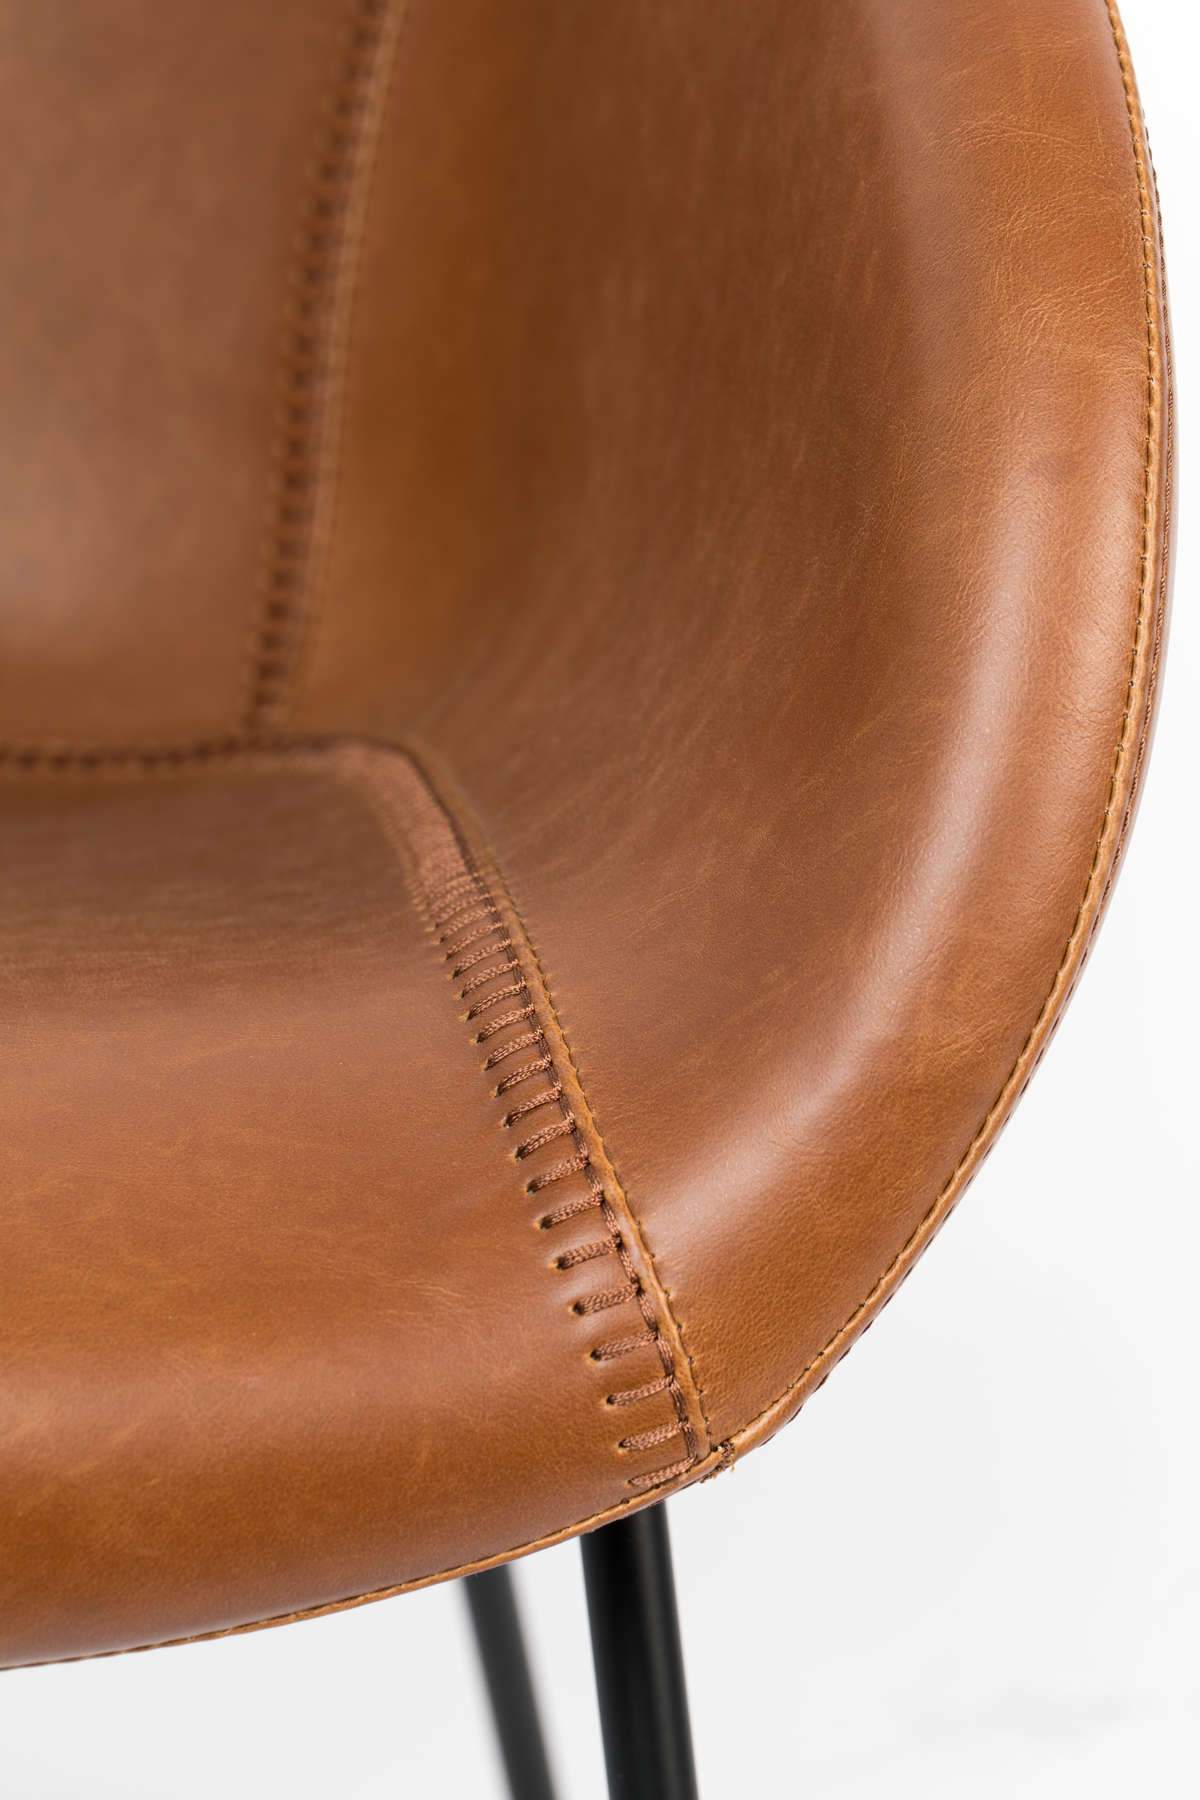 FESTON lounge armchair brown, Zuiver, Eye on Design